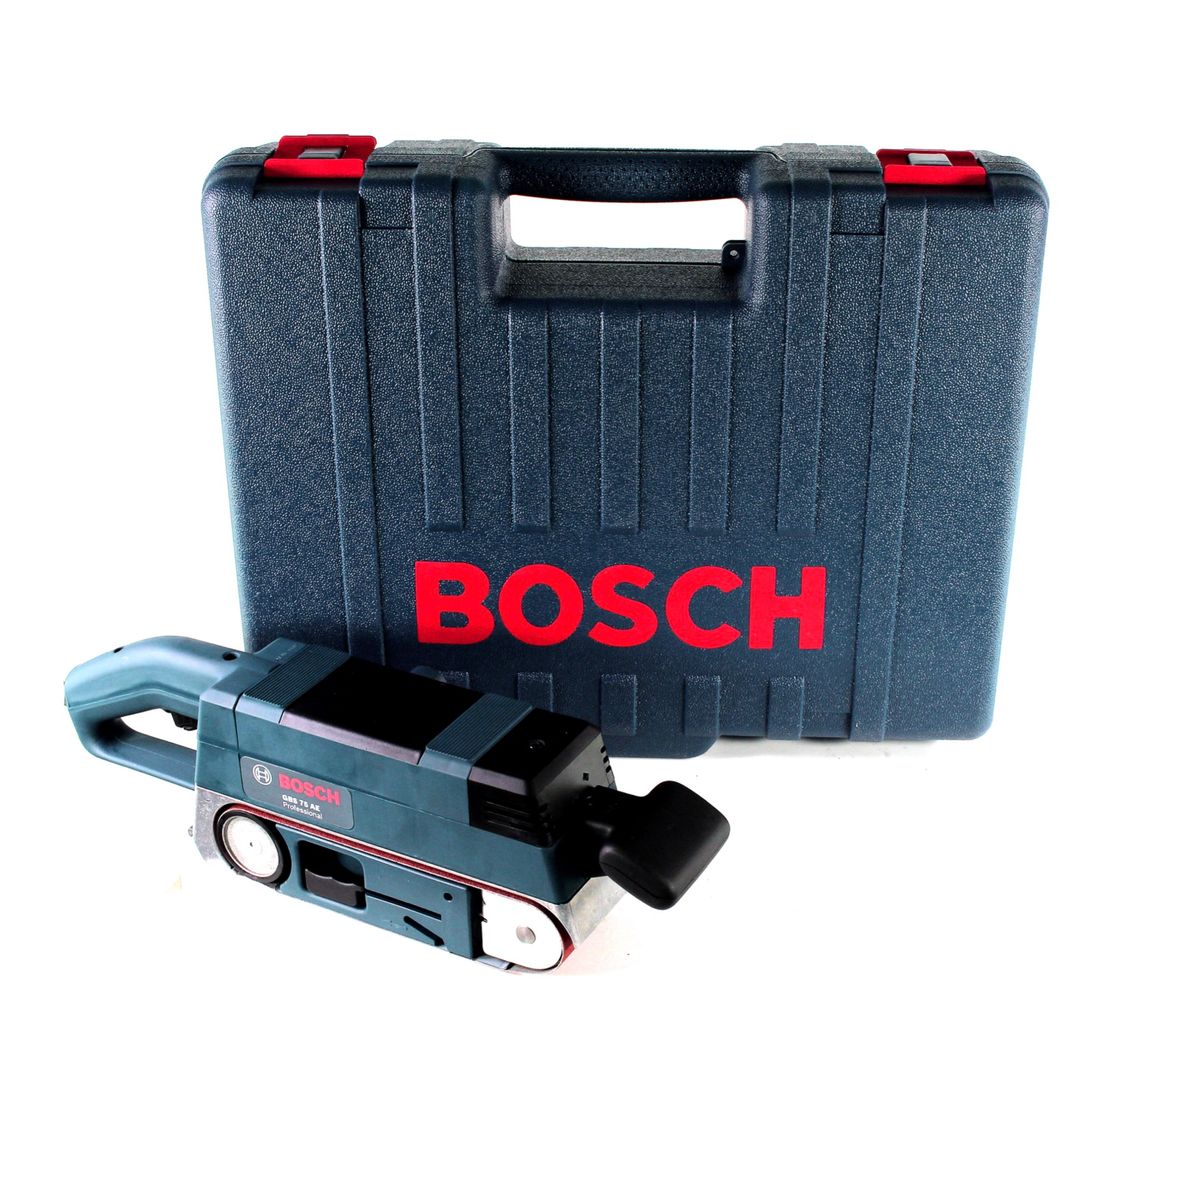 Bosch GBS 75 Ko AE 0601274707 ) mm – 75 533 W + mm 750 Toolbrothers ( x Bandschleifer